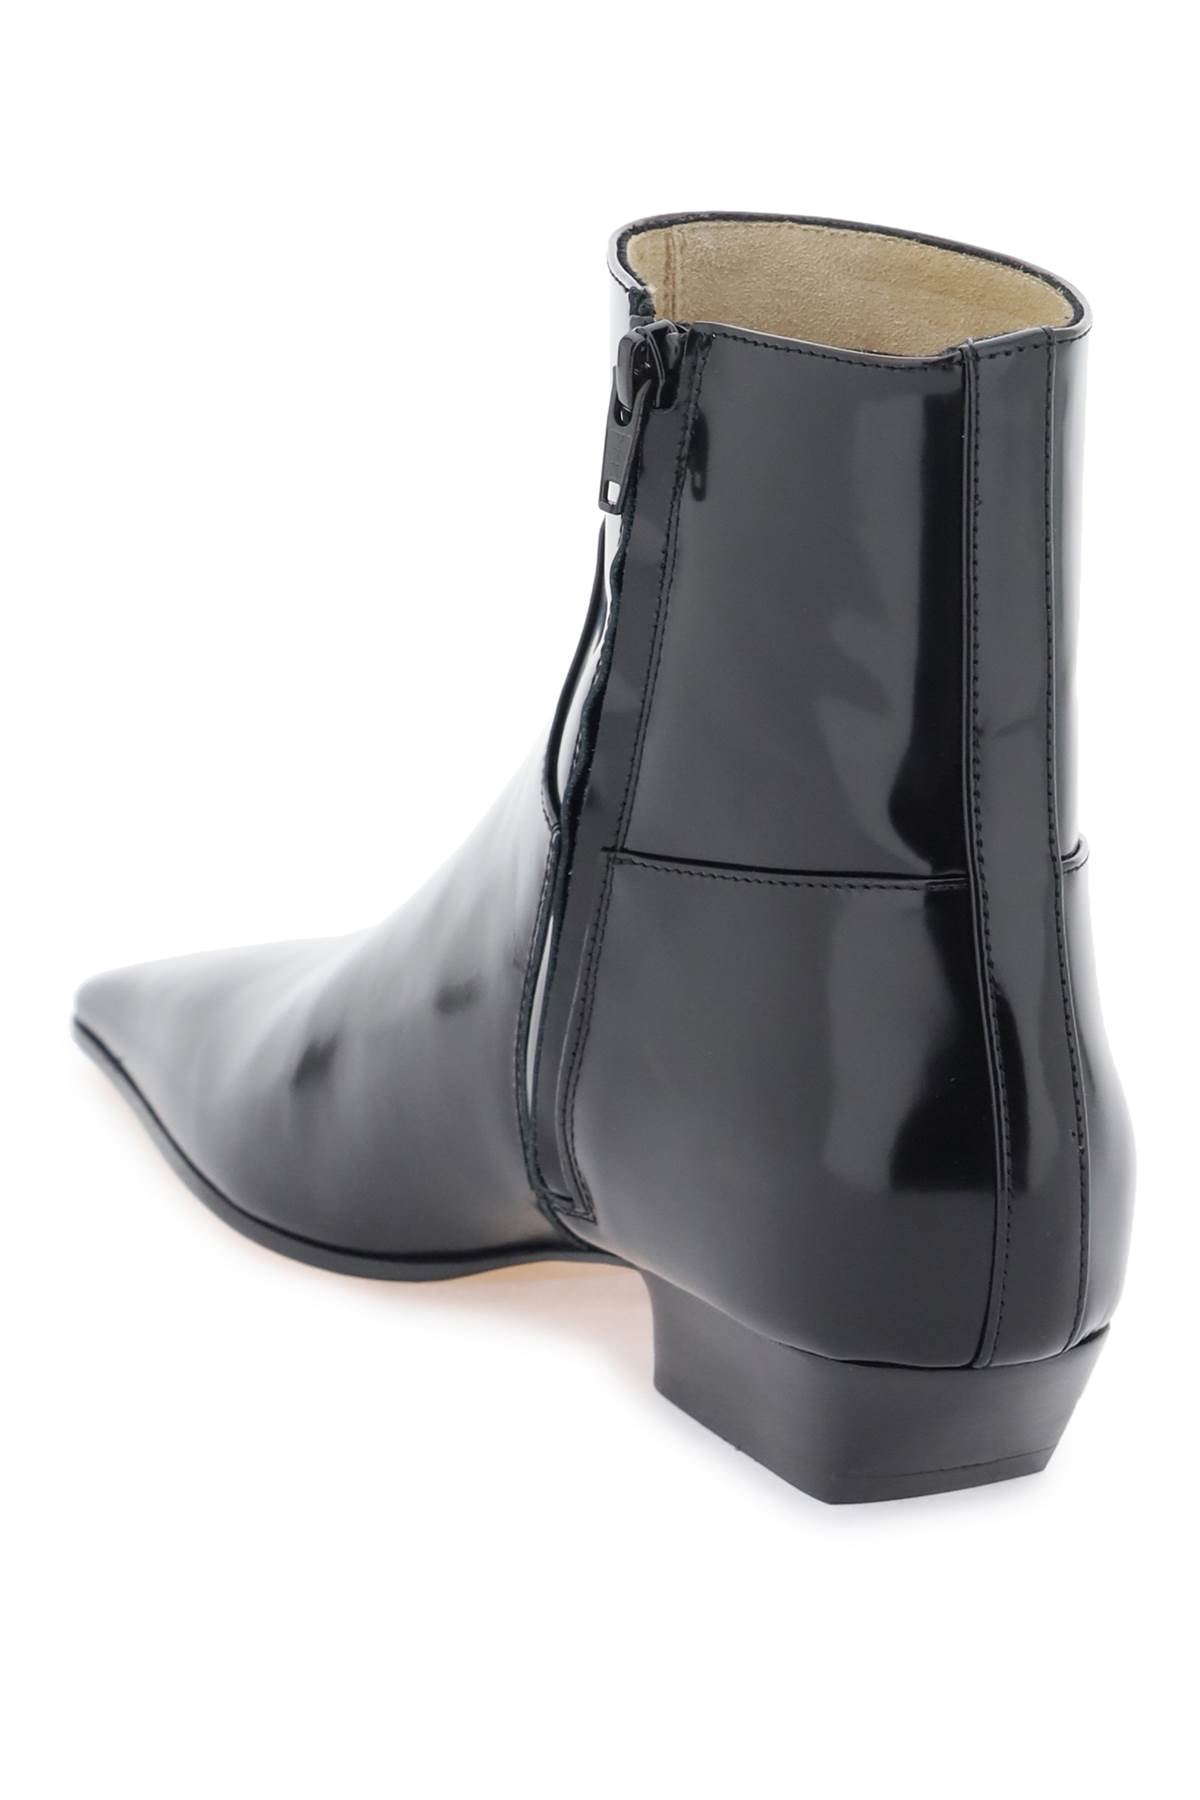 Khaite Marfa Ankle Leather Boots Black